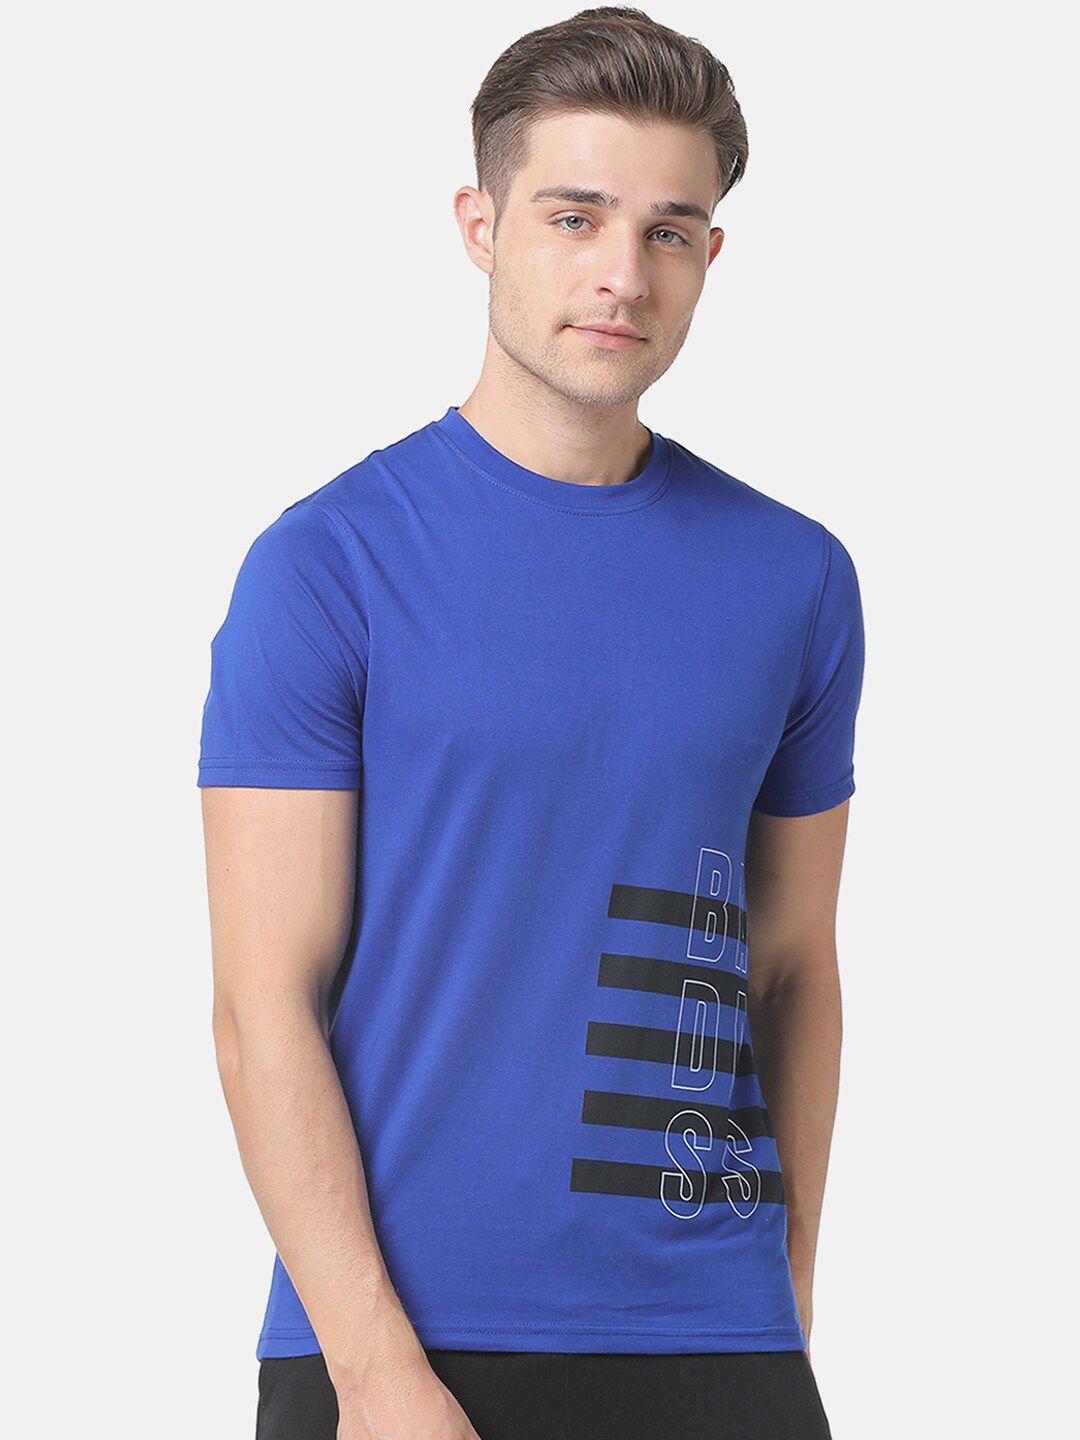 campus-sutra-men-blue-printed-t-shirt